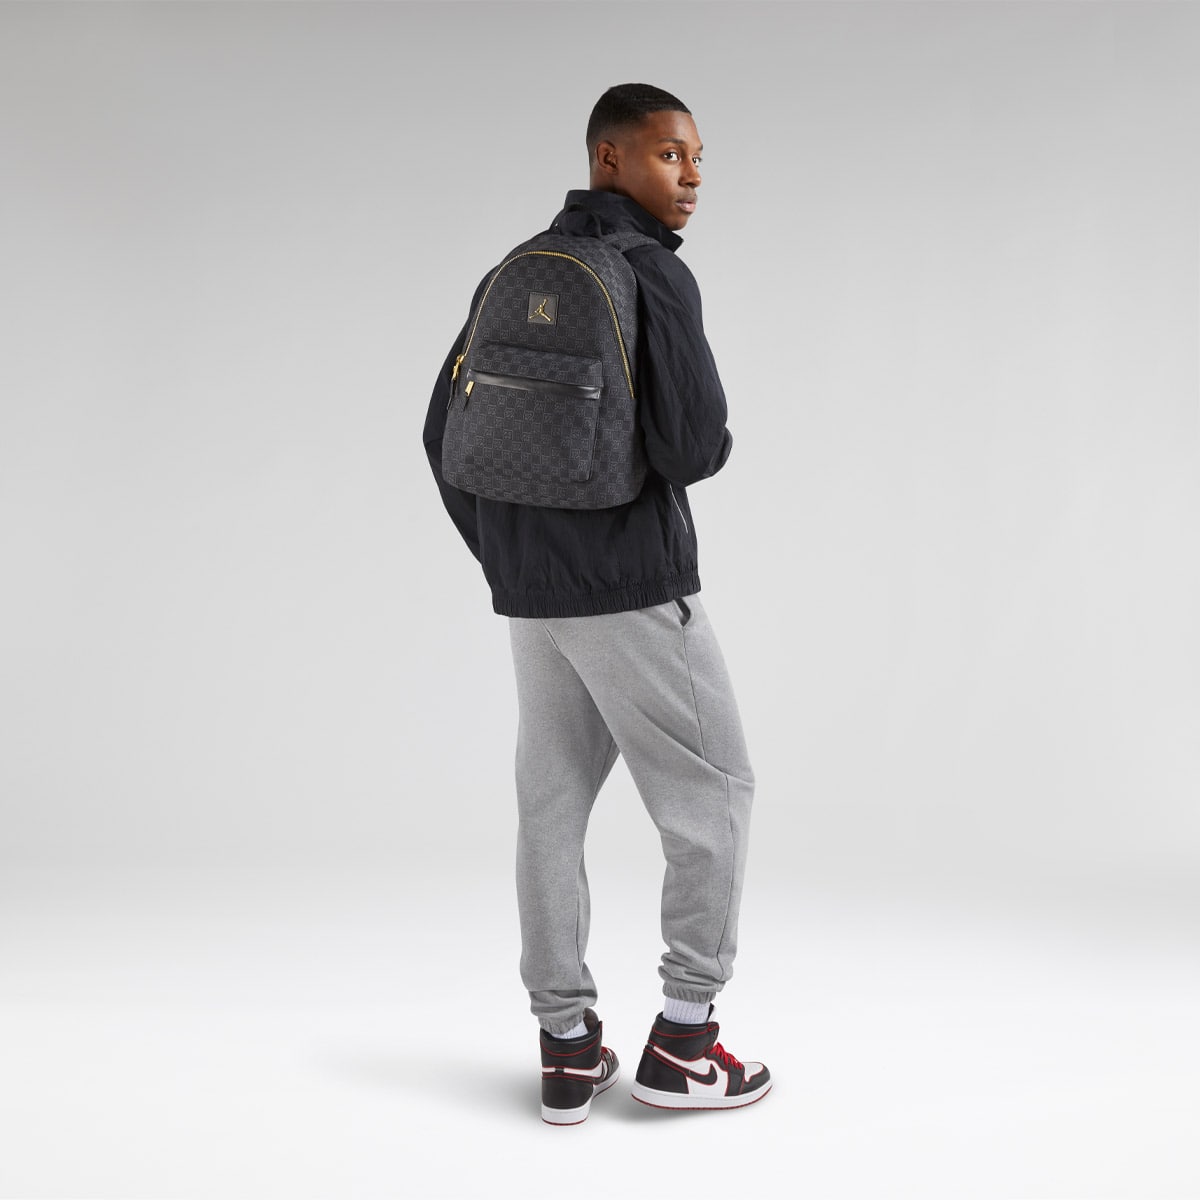 Jordan Brand Monogram Backpack "Black"